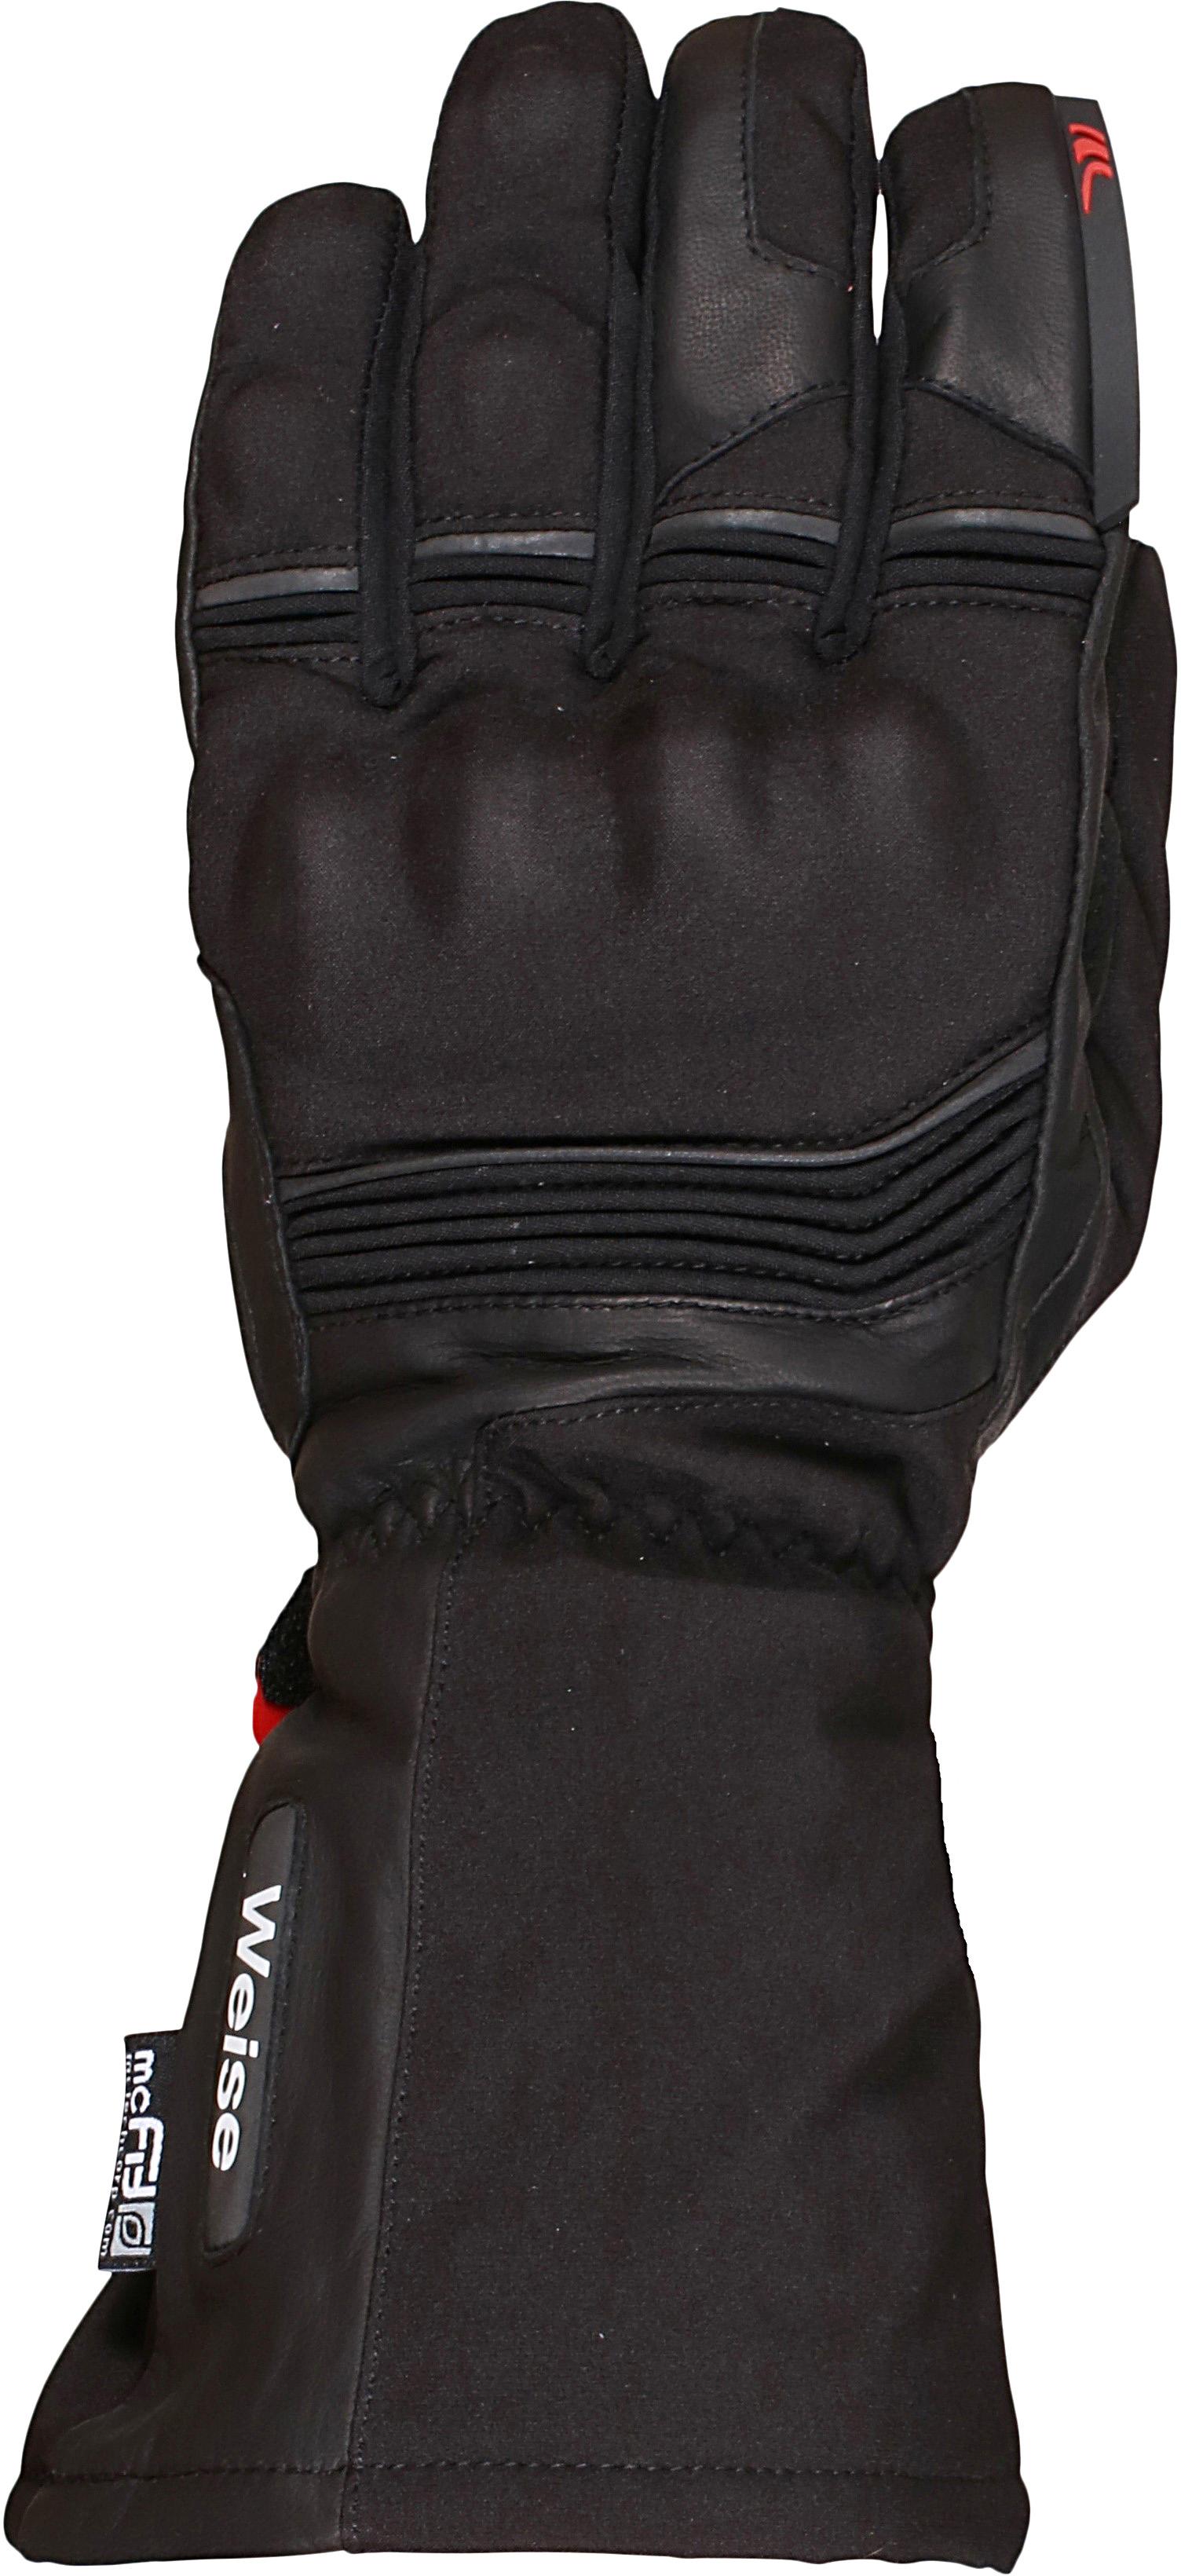 Weise Montana 150 Motorcycle Gloves - Black, M